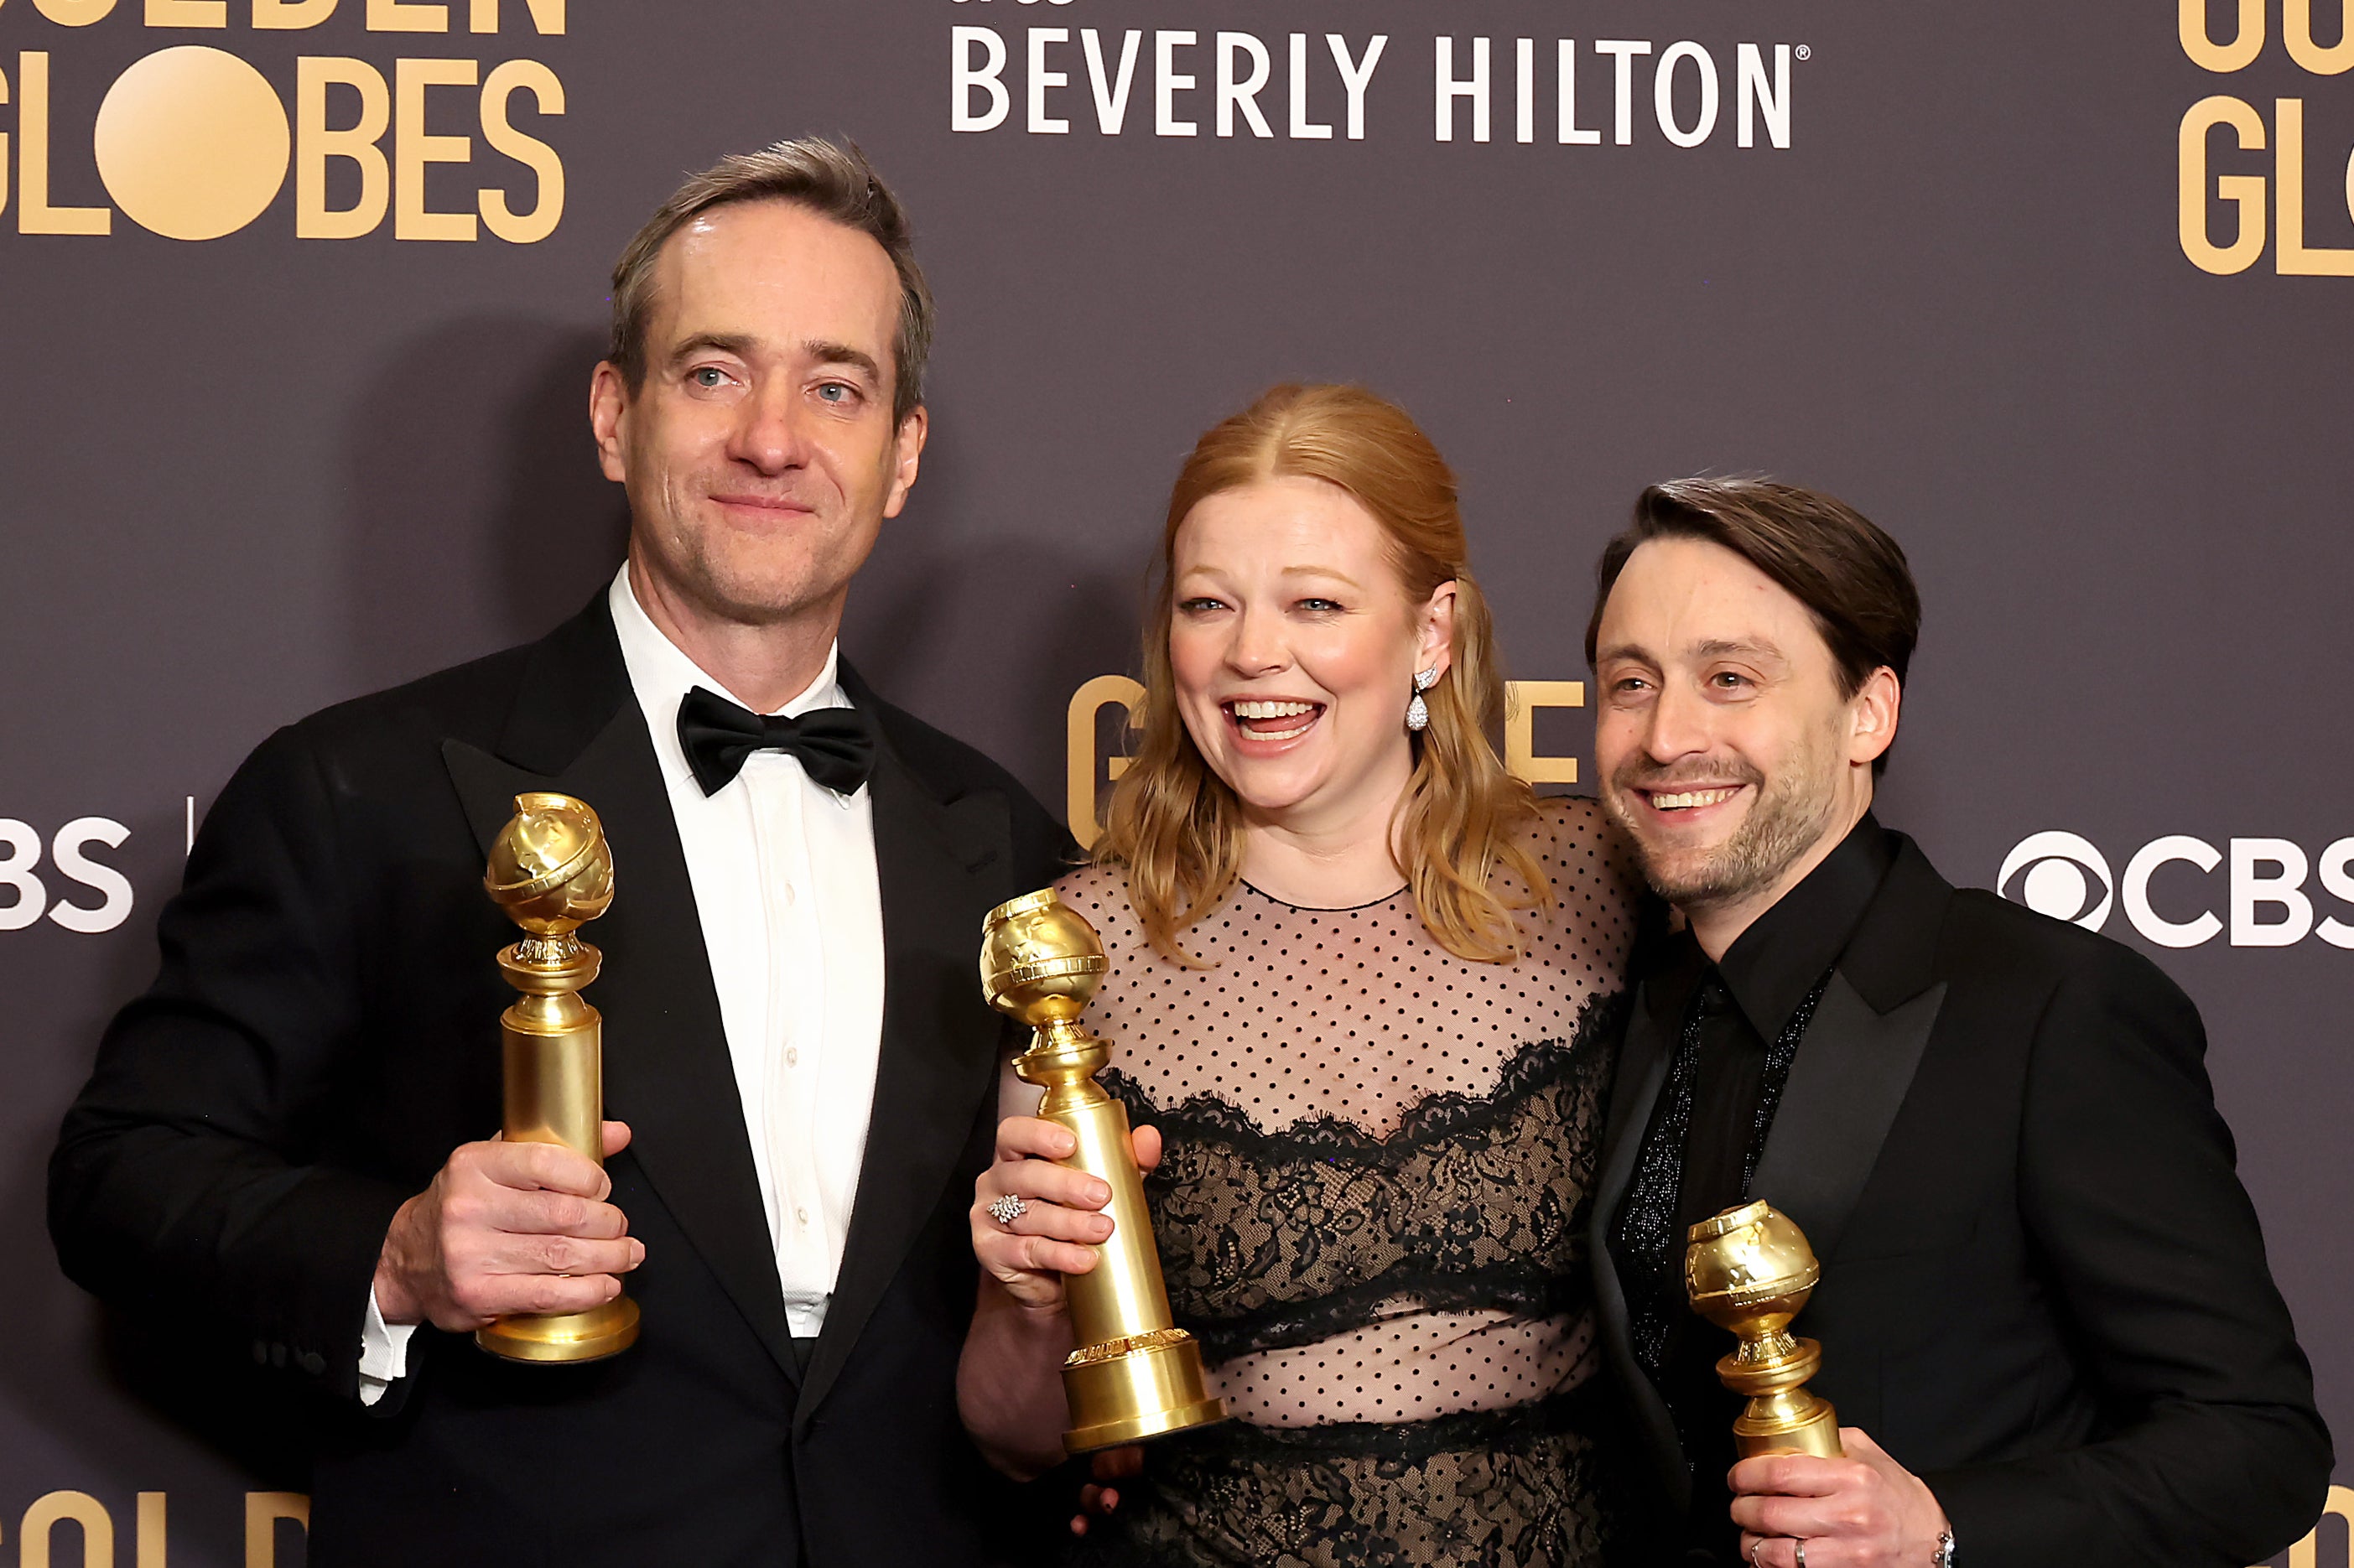 ‘Succession’ stars Matthew Macfadyen, Sarah Snook and Kieran Culkin at the Golden Globe awards this January